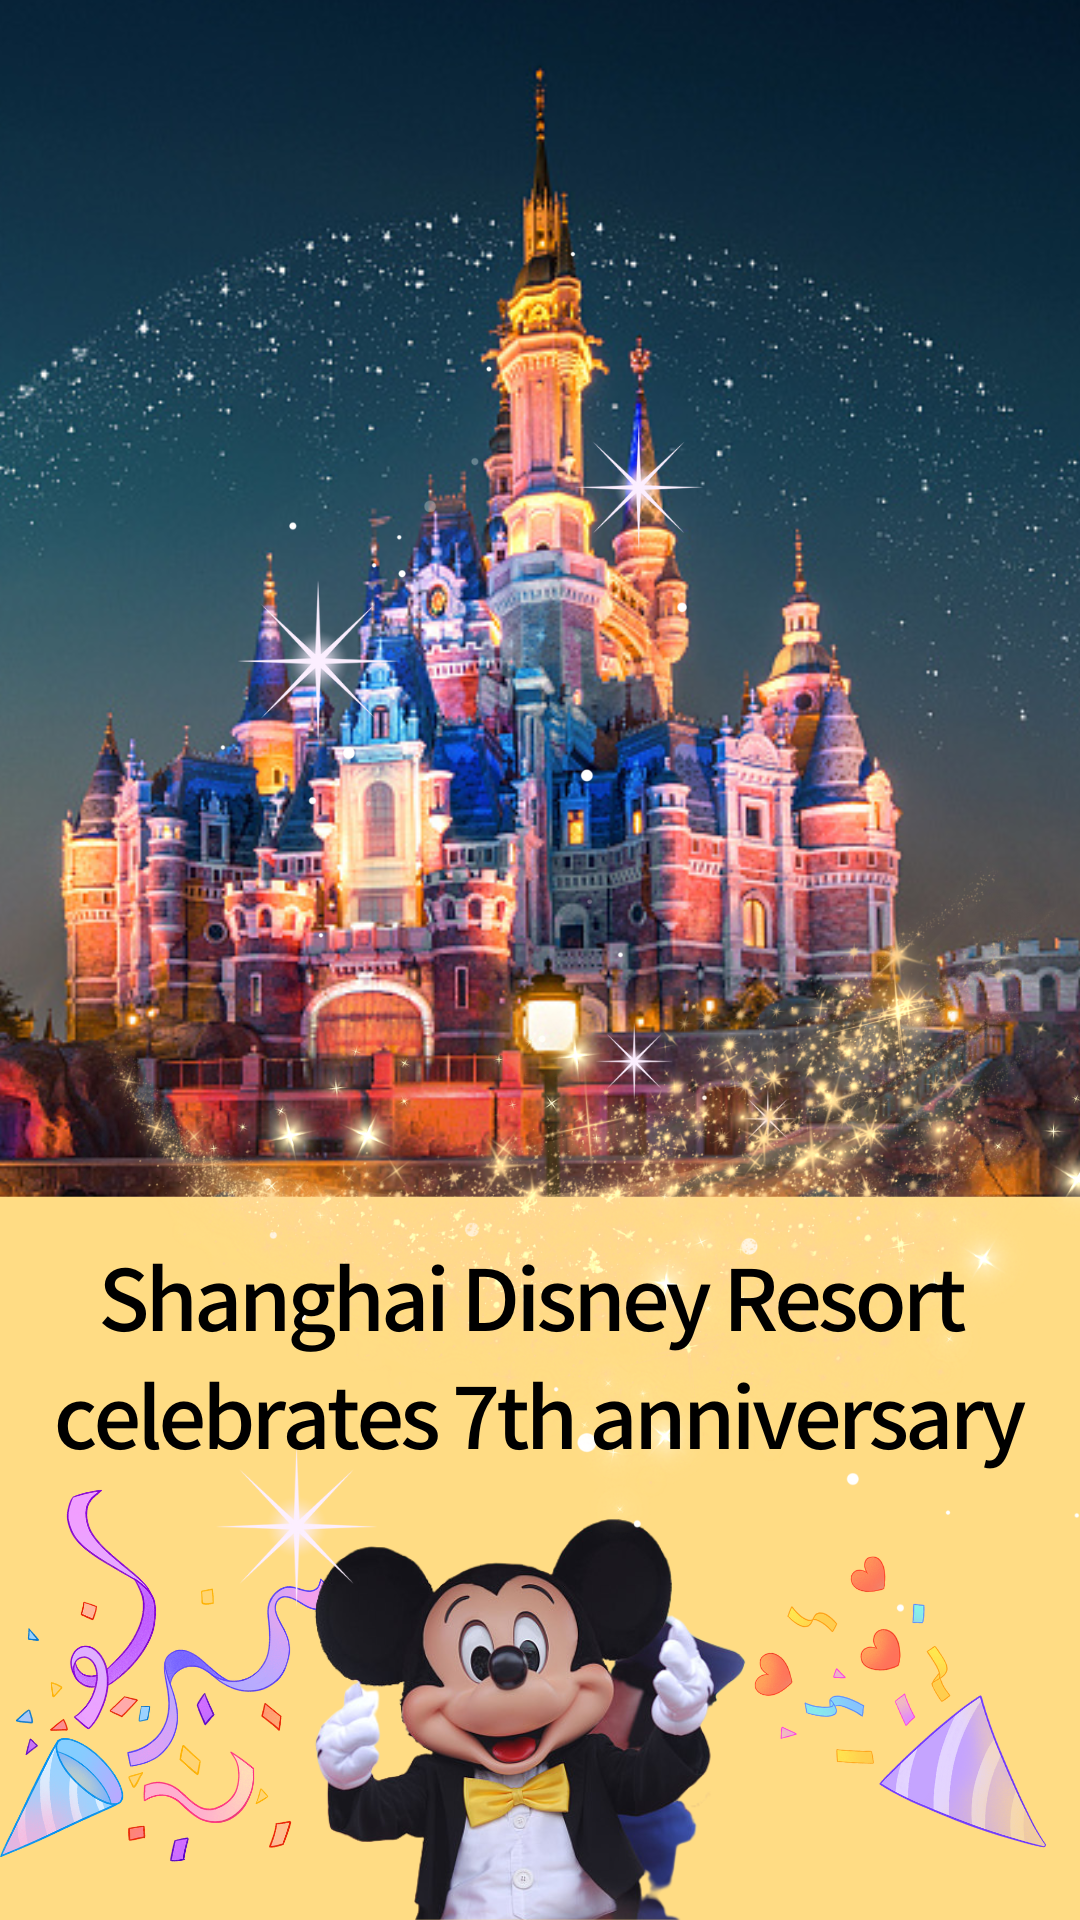 Shanghai Disney Resort celebrates 7th anniversary